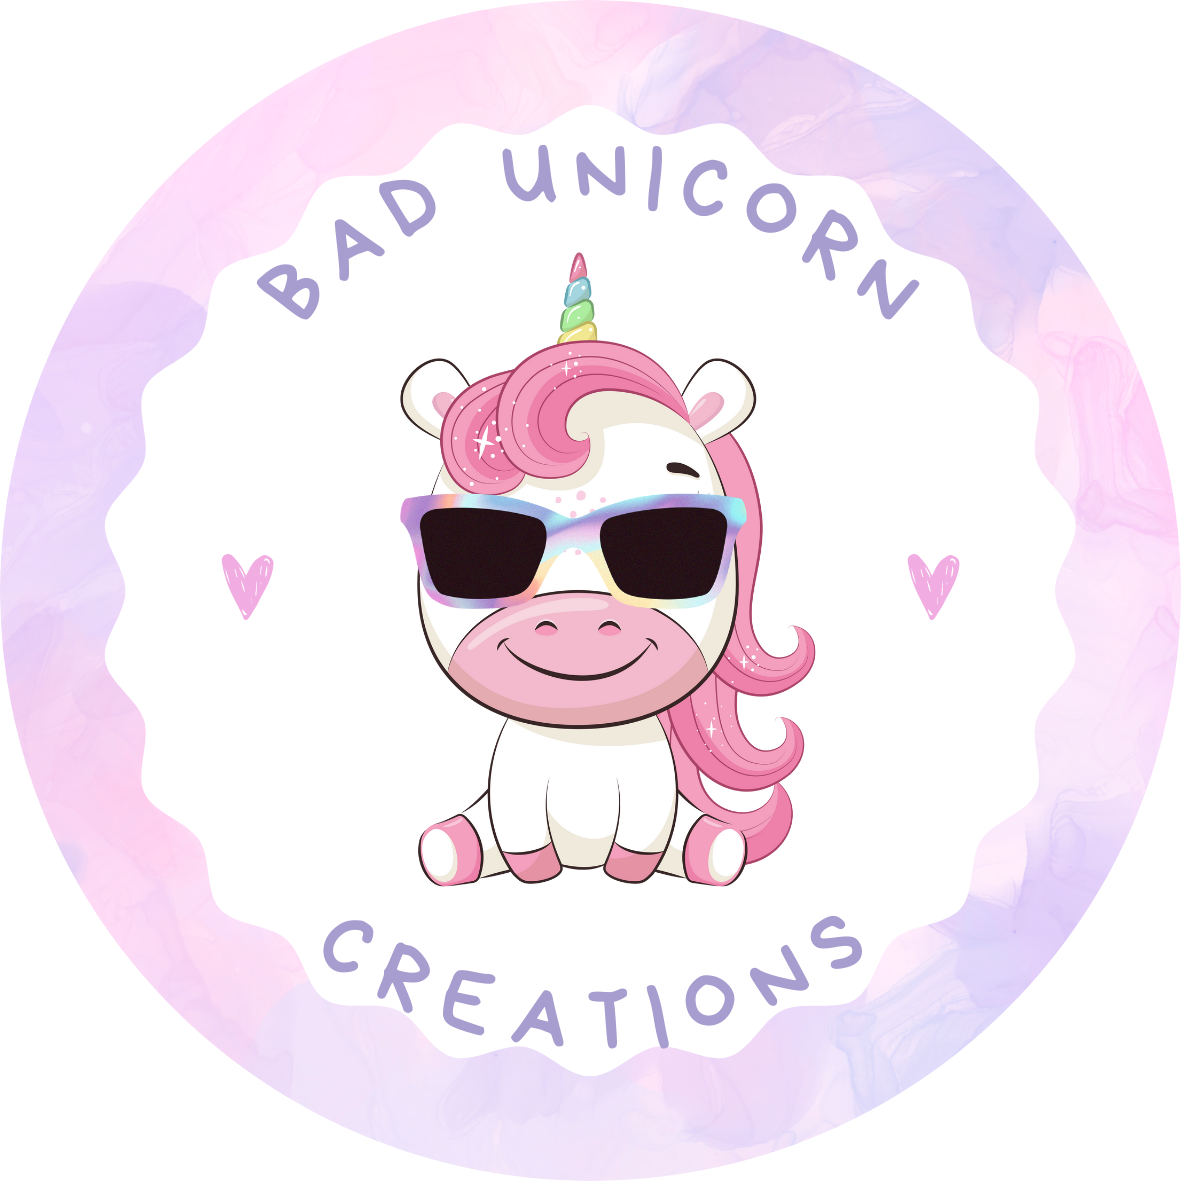 Bad Unicorn Creations